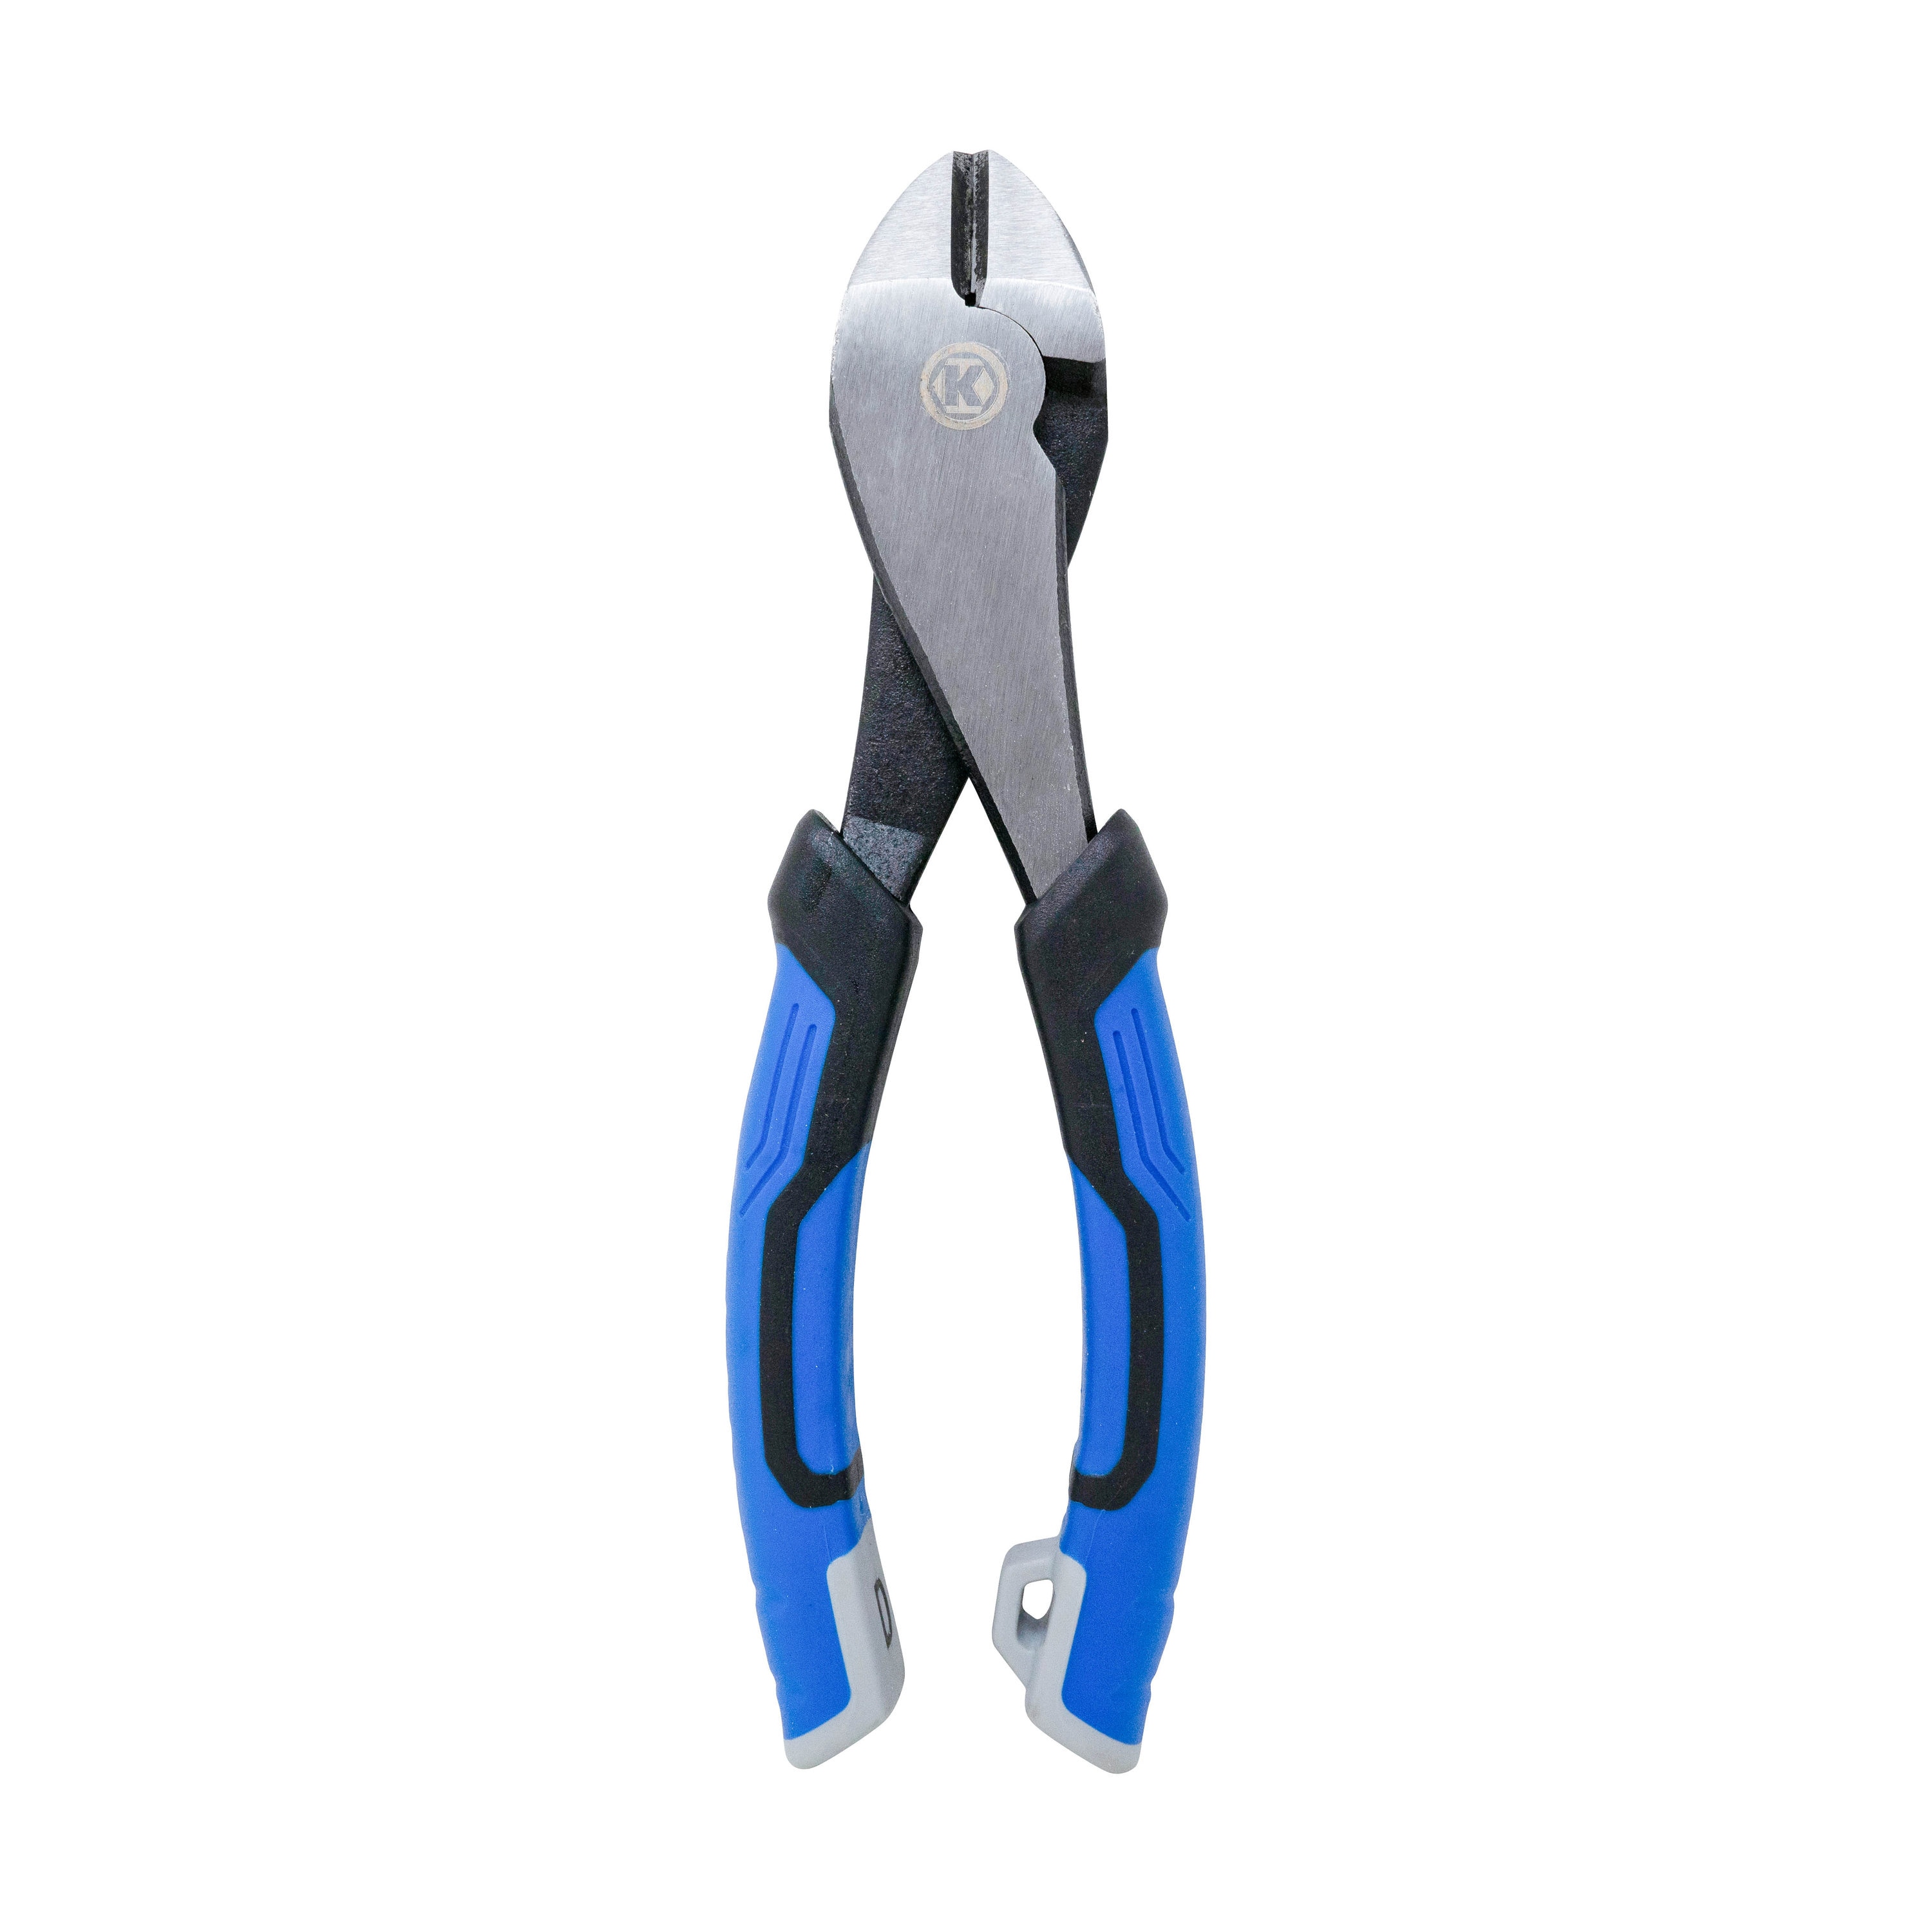 Kobalt 7 Inch Diagonal Cutting Pliers 0464600 Chrome Nickel Steel for sale online 